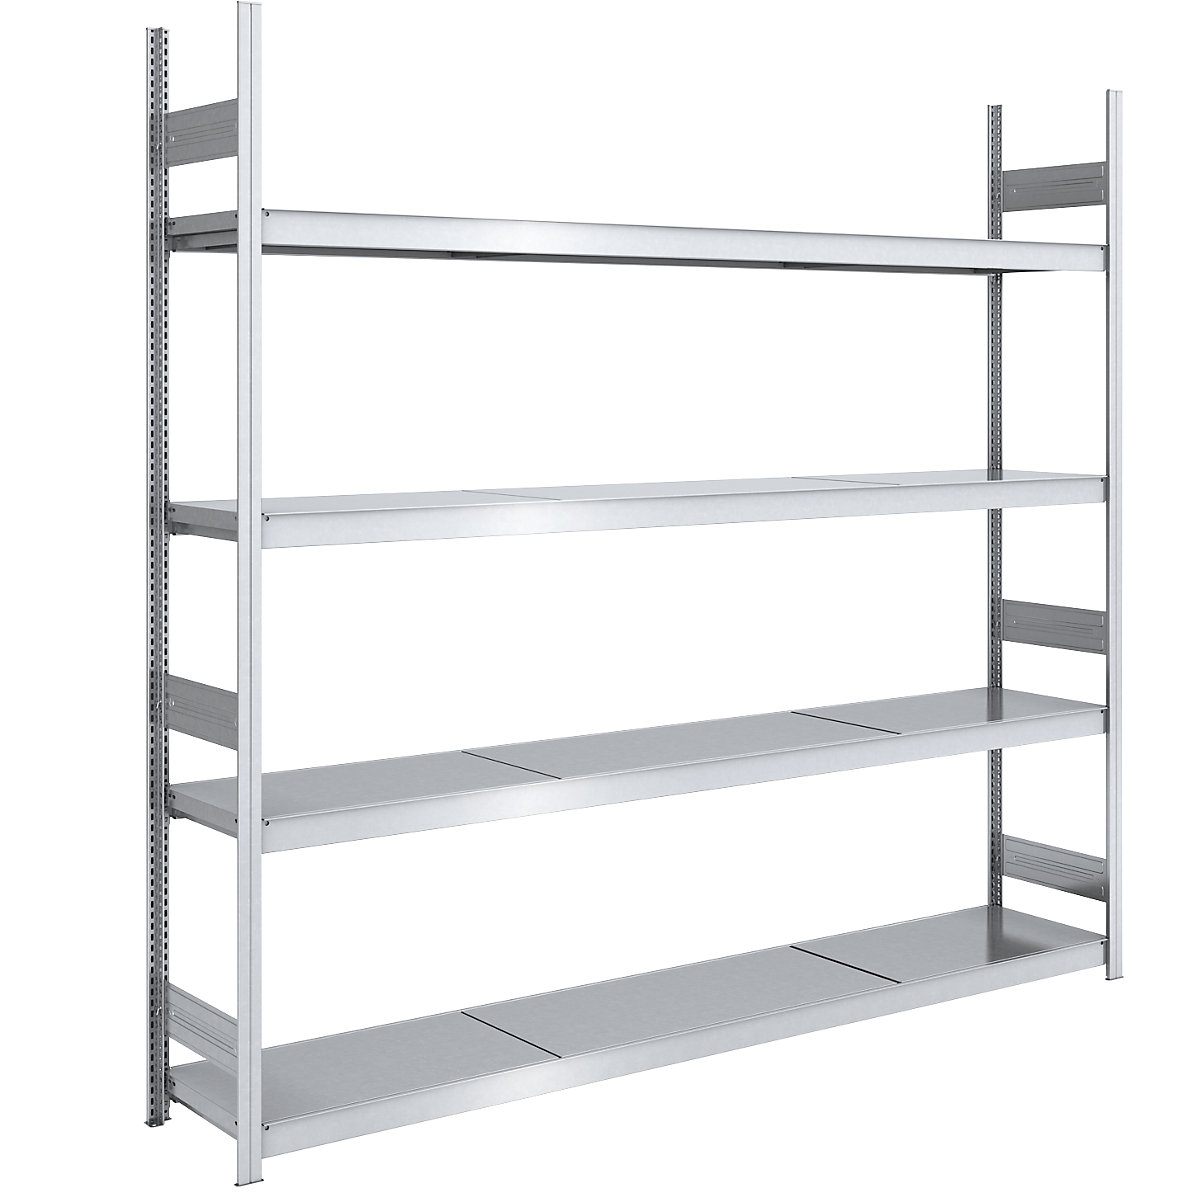 Wide span boltless shelving unit with steel shelves – hofe, height 2500 mm, shelf width 2500 mm, shelf depth 500 mm, standard shelf unit